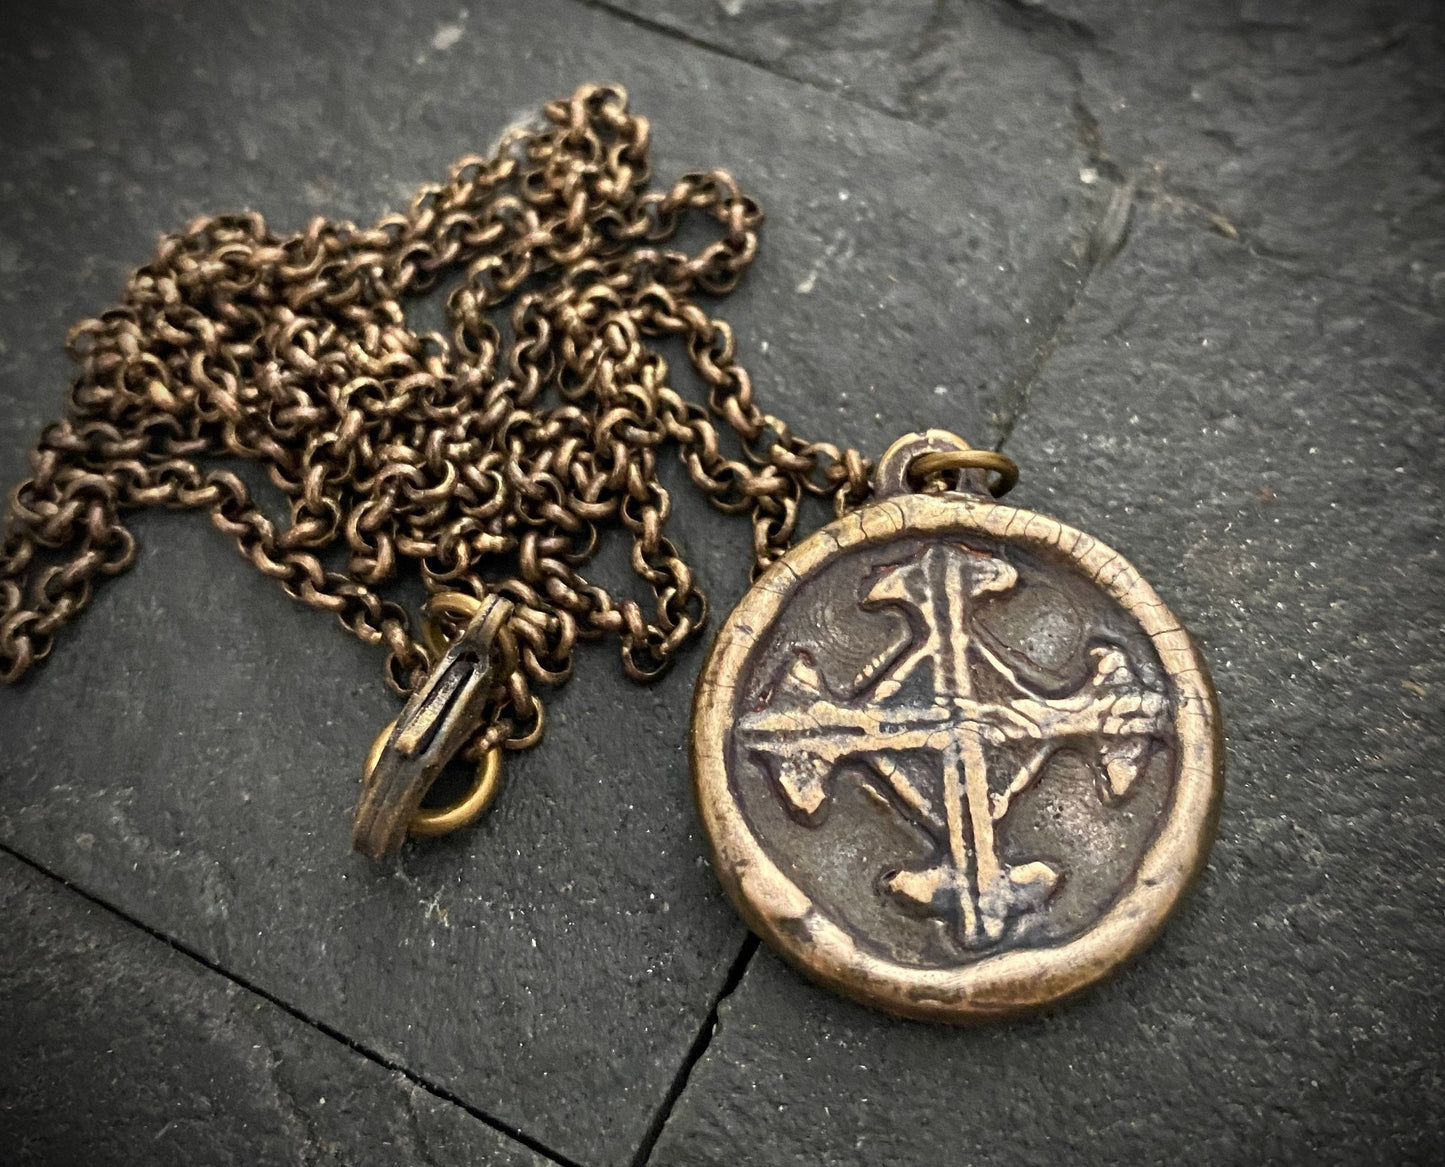 Serenity Prayer Necklace, Men's Soldered Bronze Pendant with Cross, Unisex Jewelry Gift, Faith, BR-043